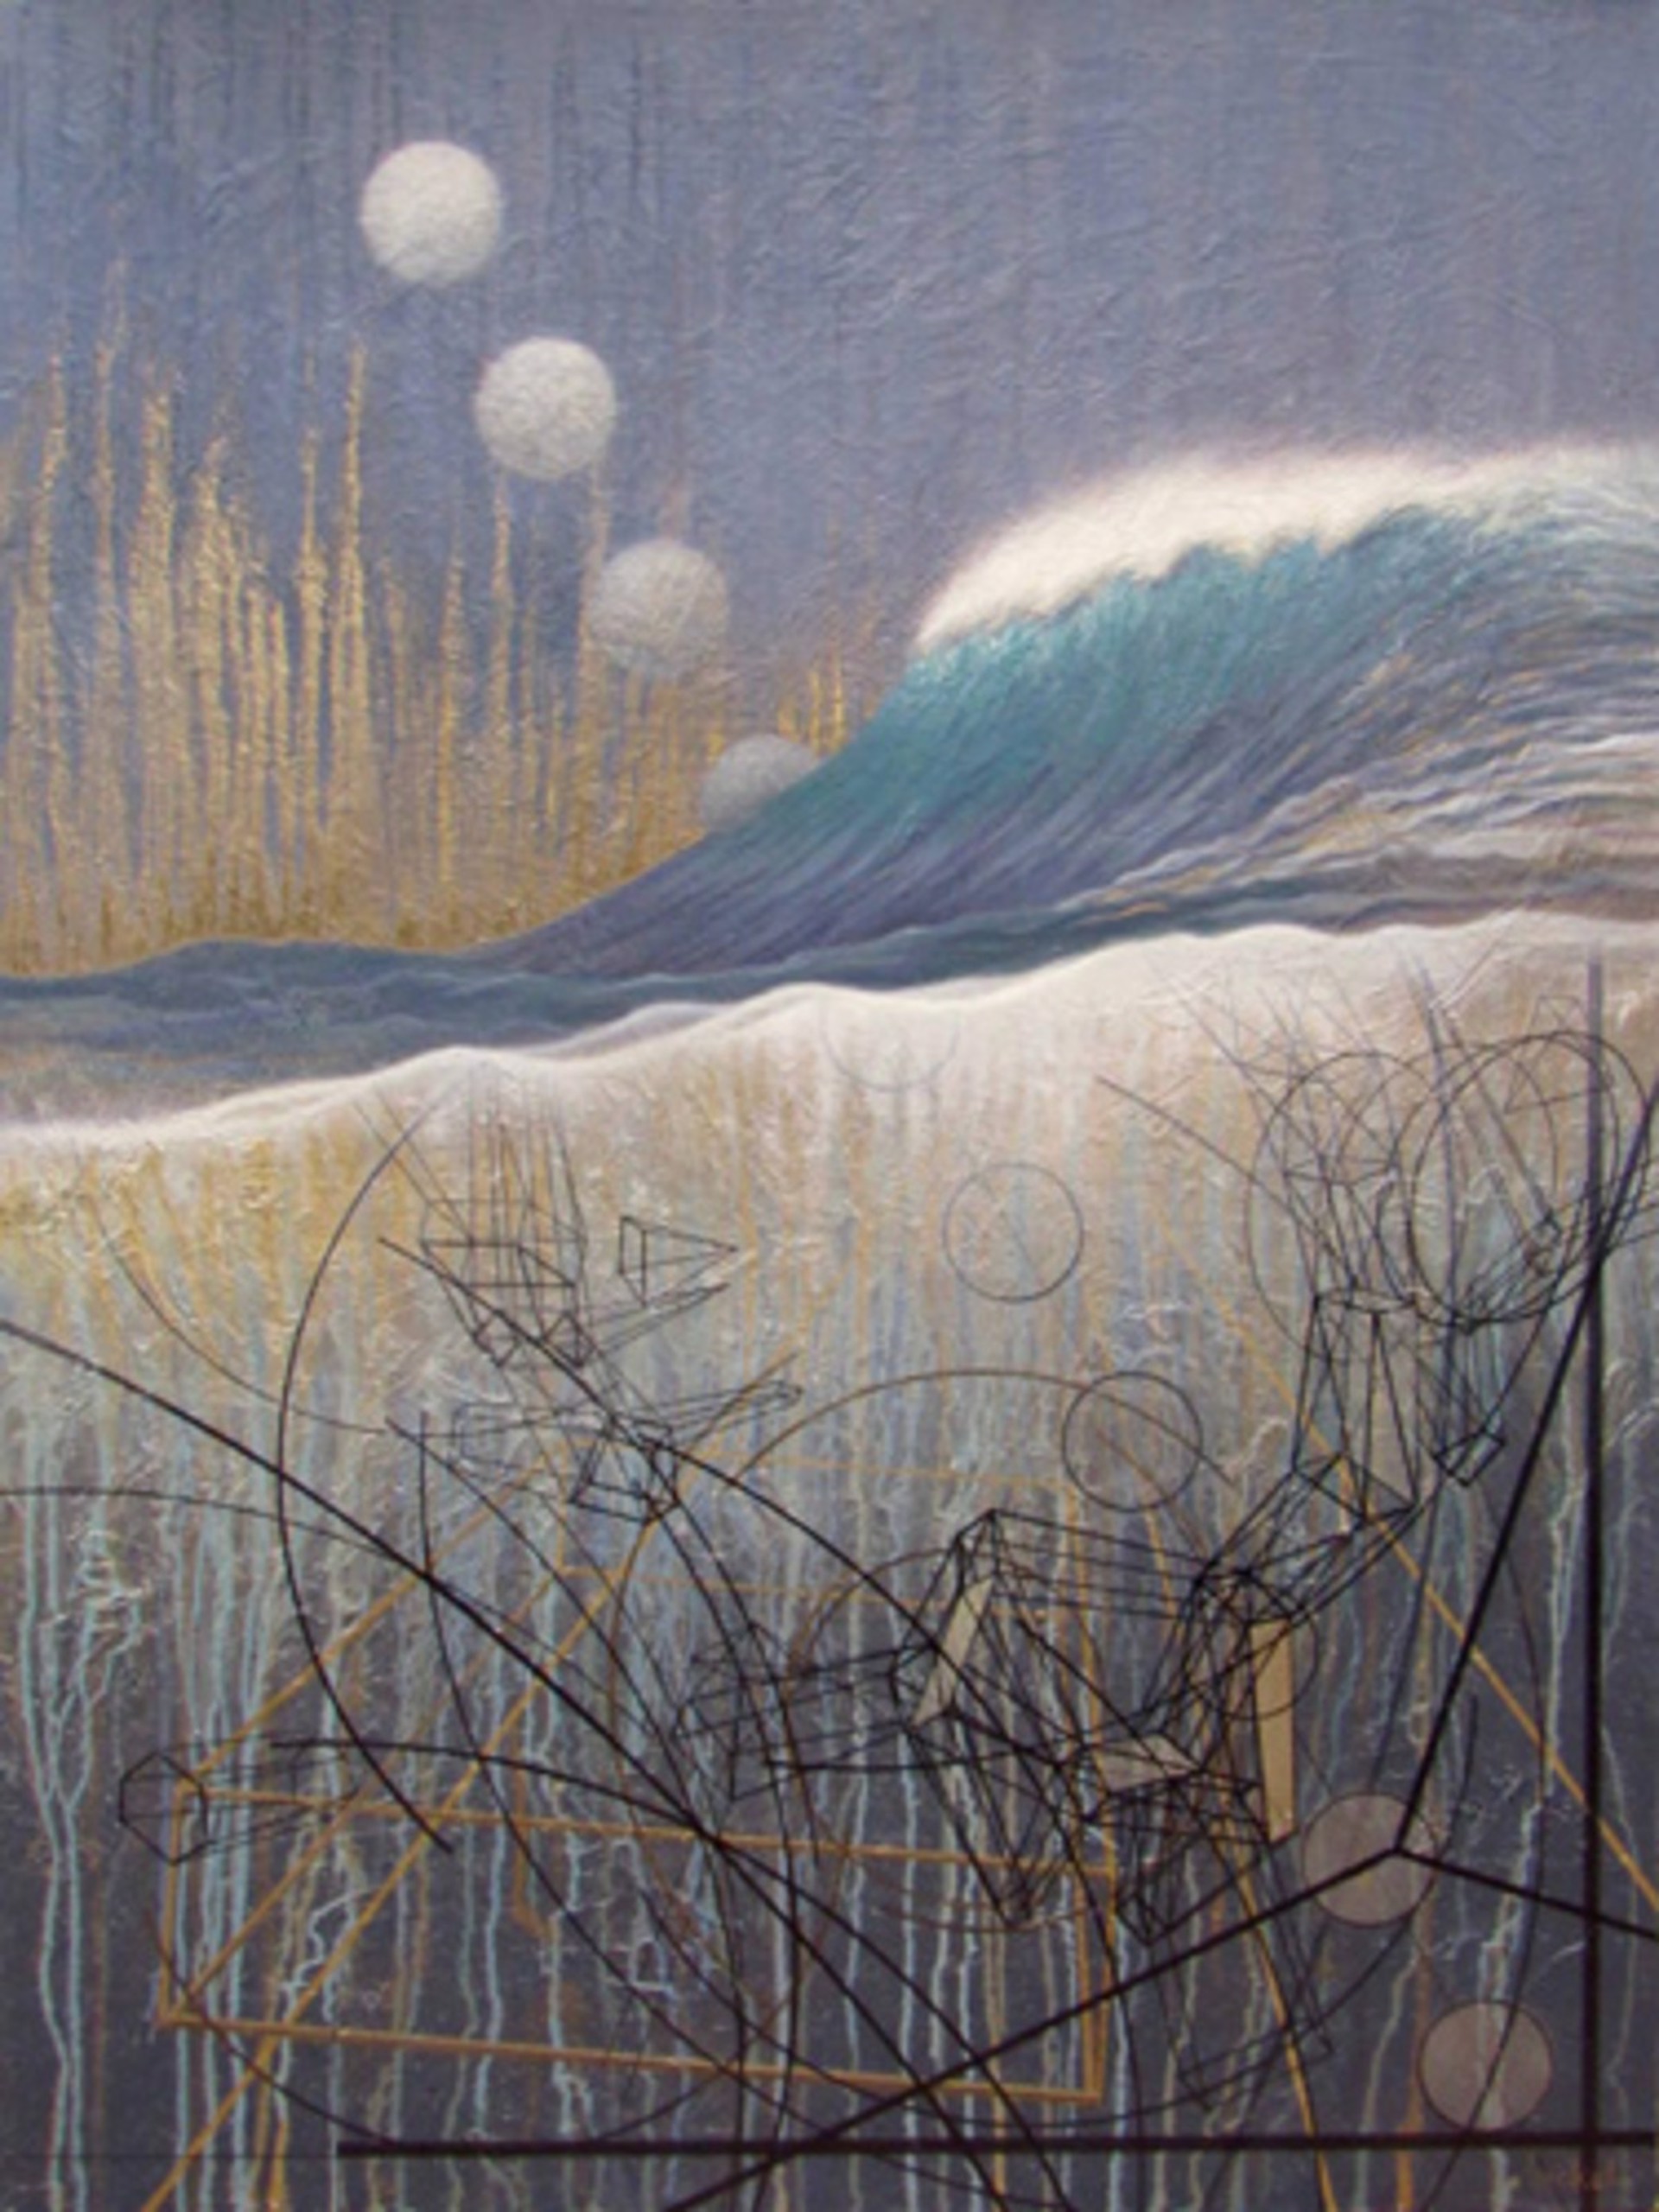 Under the Wave Study 18 by Robert Bickel